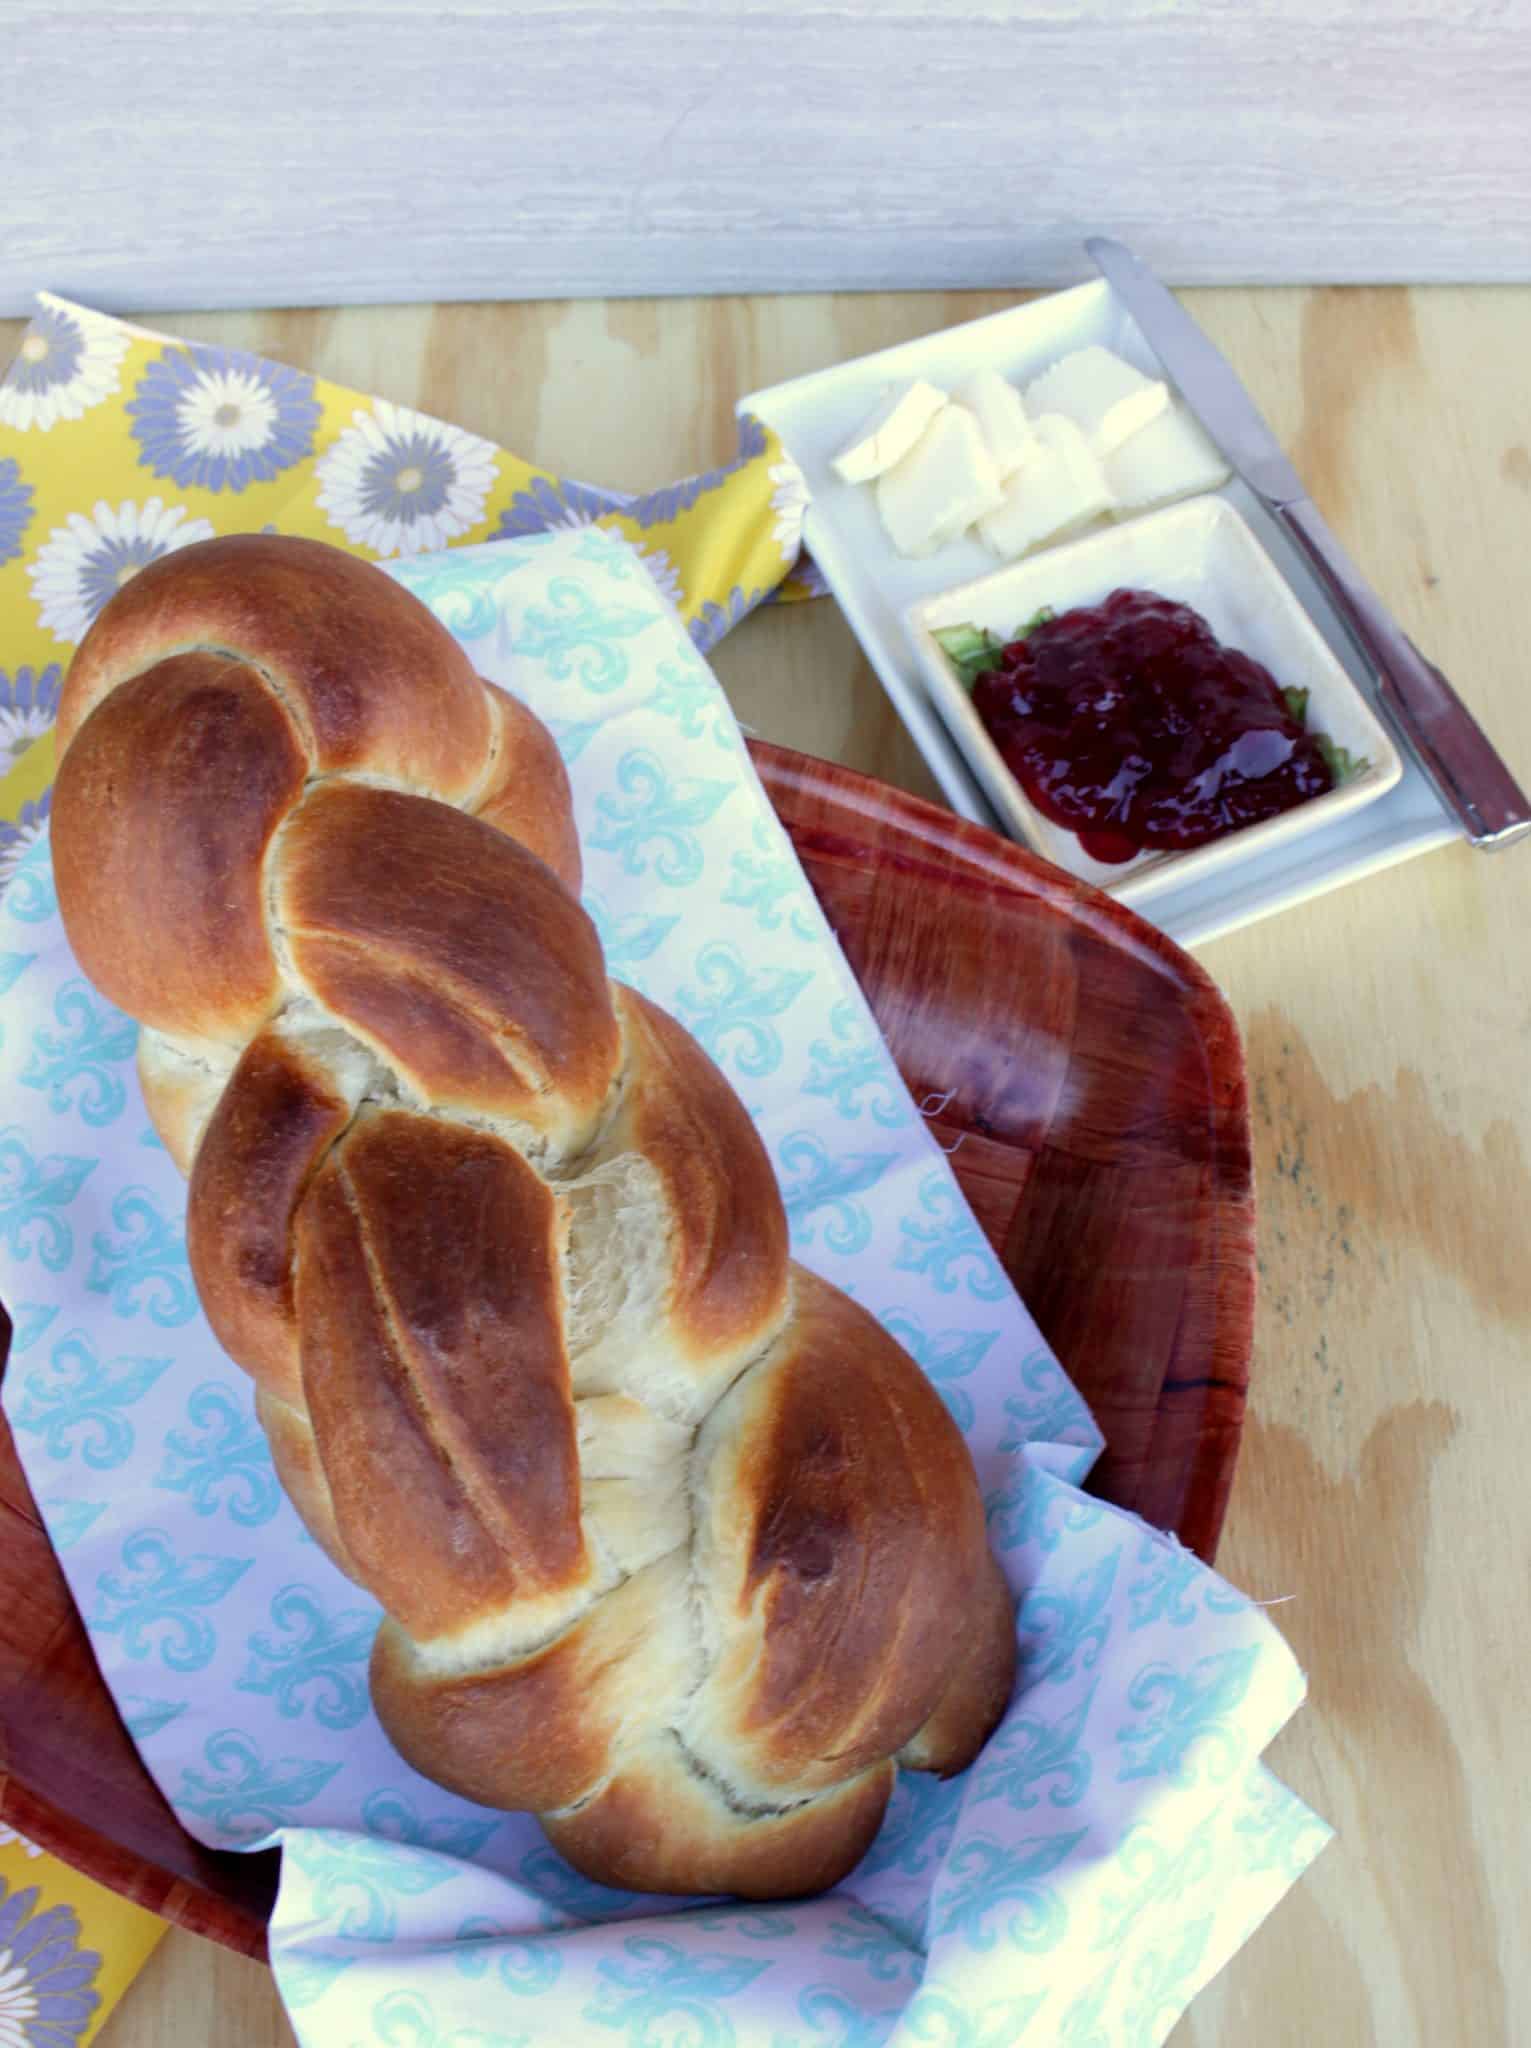  Zupfe | Swiss Braided bread in a Tray